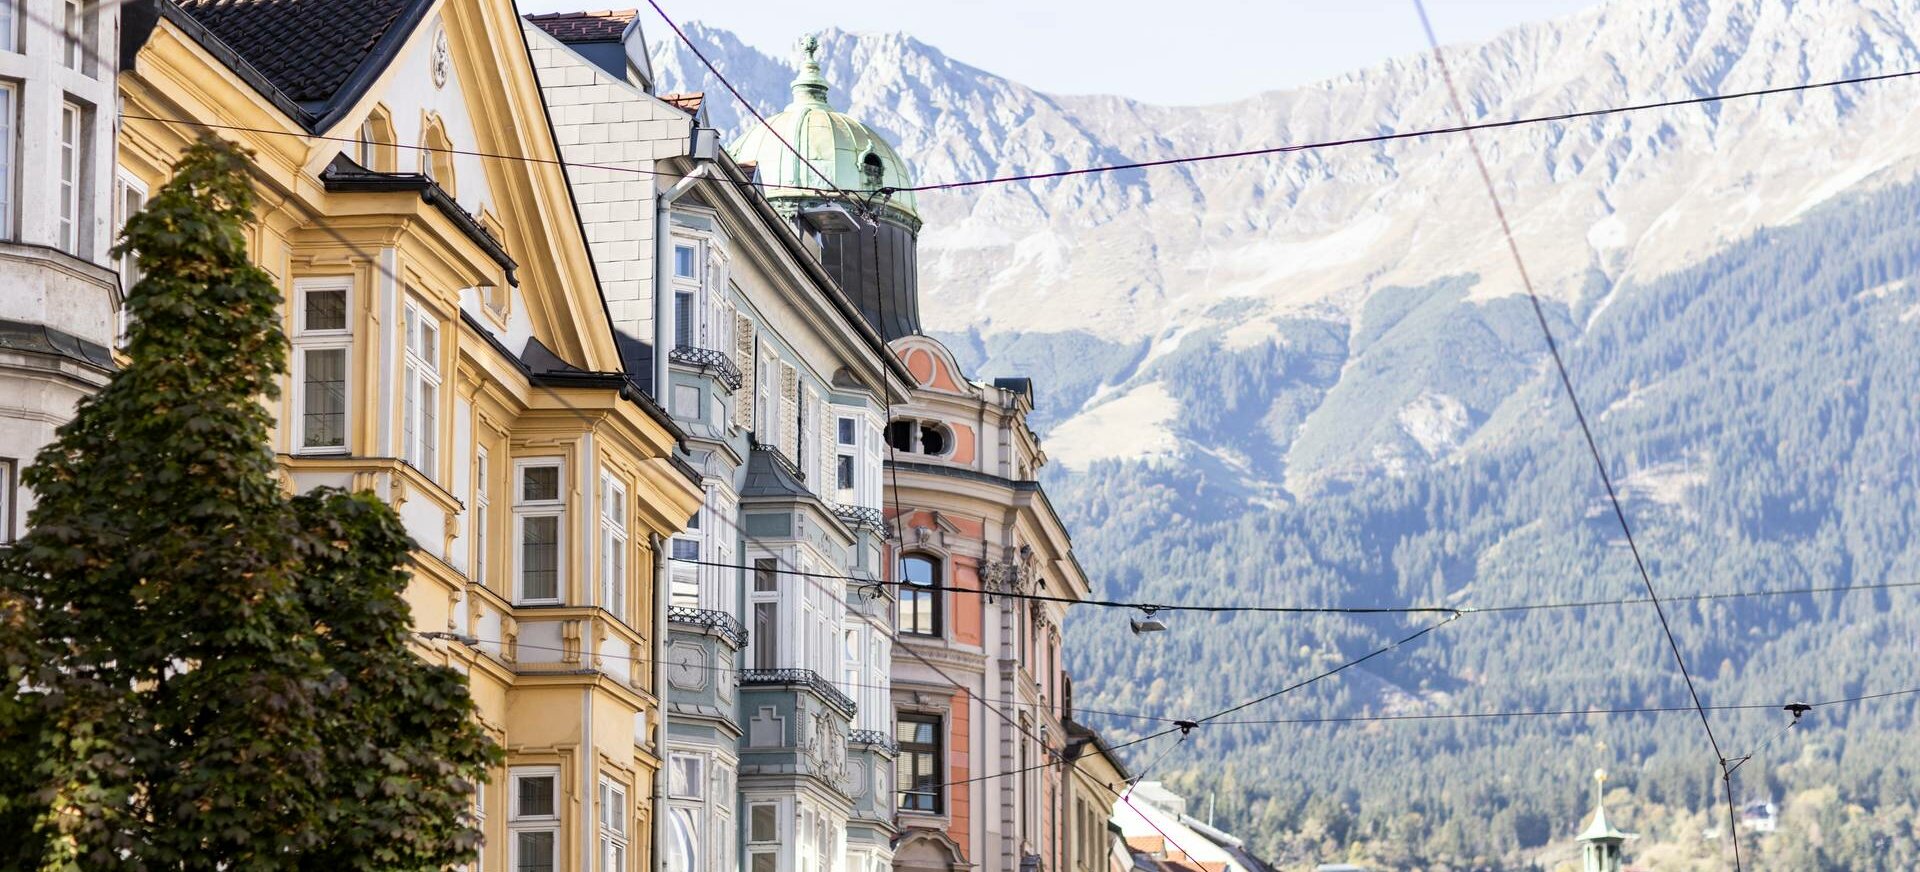 Kontaktieren Sie Rechtsanwalt Grüner in Innsbruck, Tirol